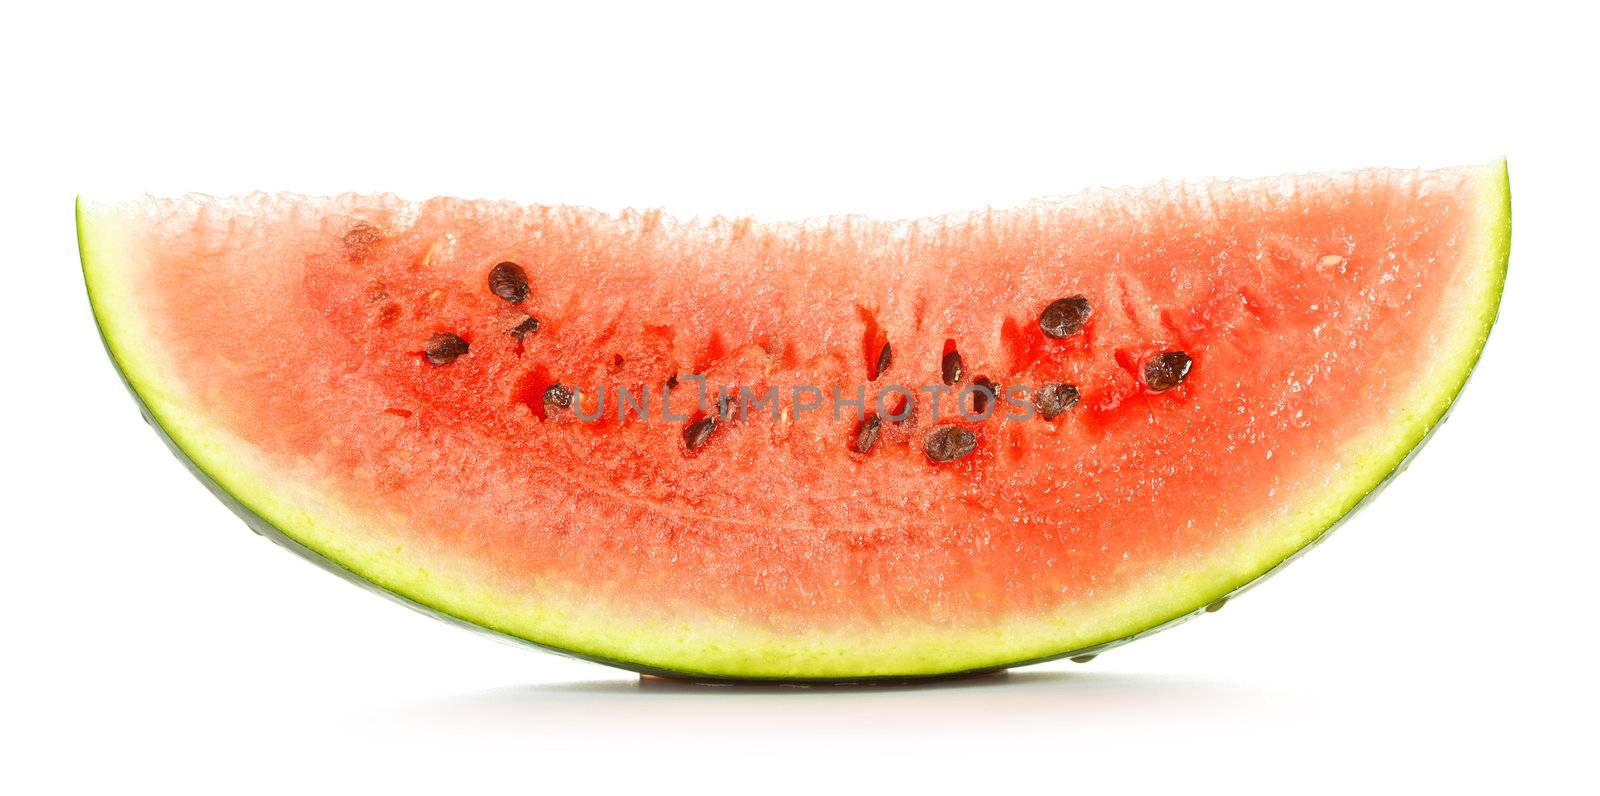 Slice of Watermelon by petr_malyshev